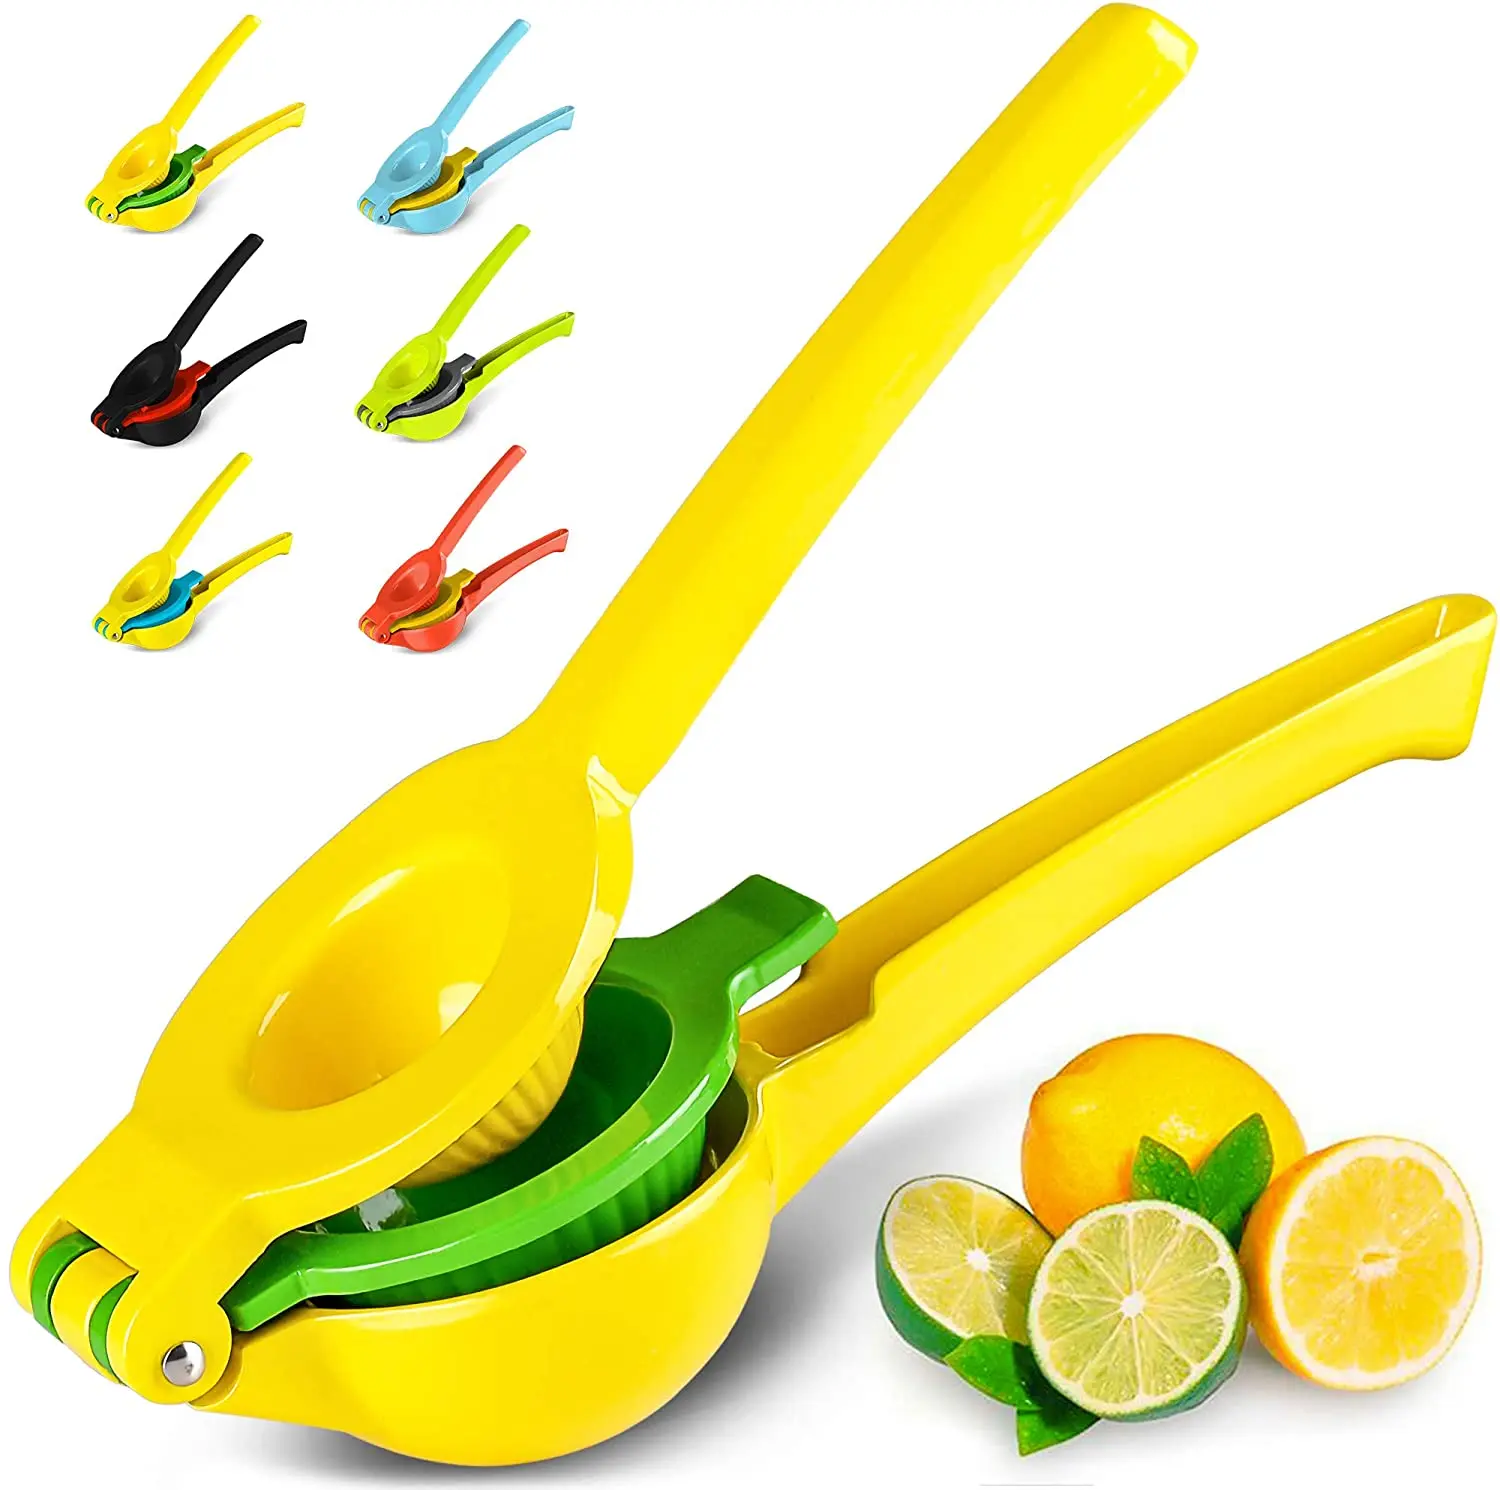 

Premium Quality Metal Lemon Lime Squeezer - Manual Citrus Press Juicer queezer hand Press Juicer